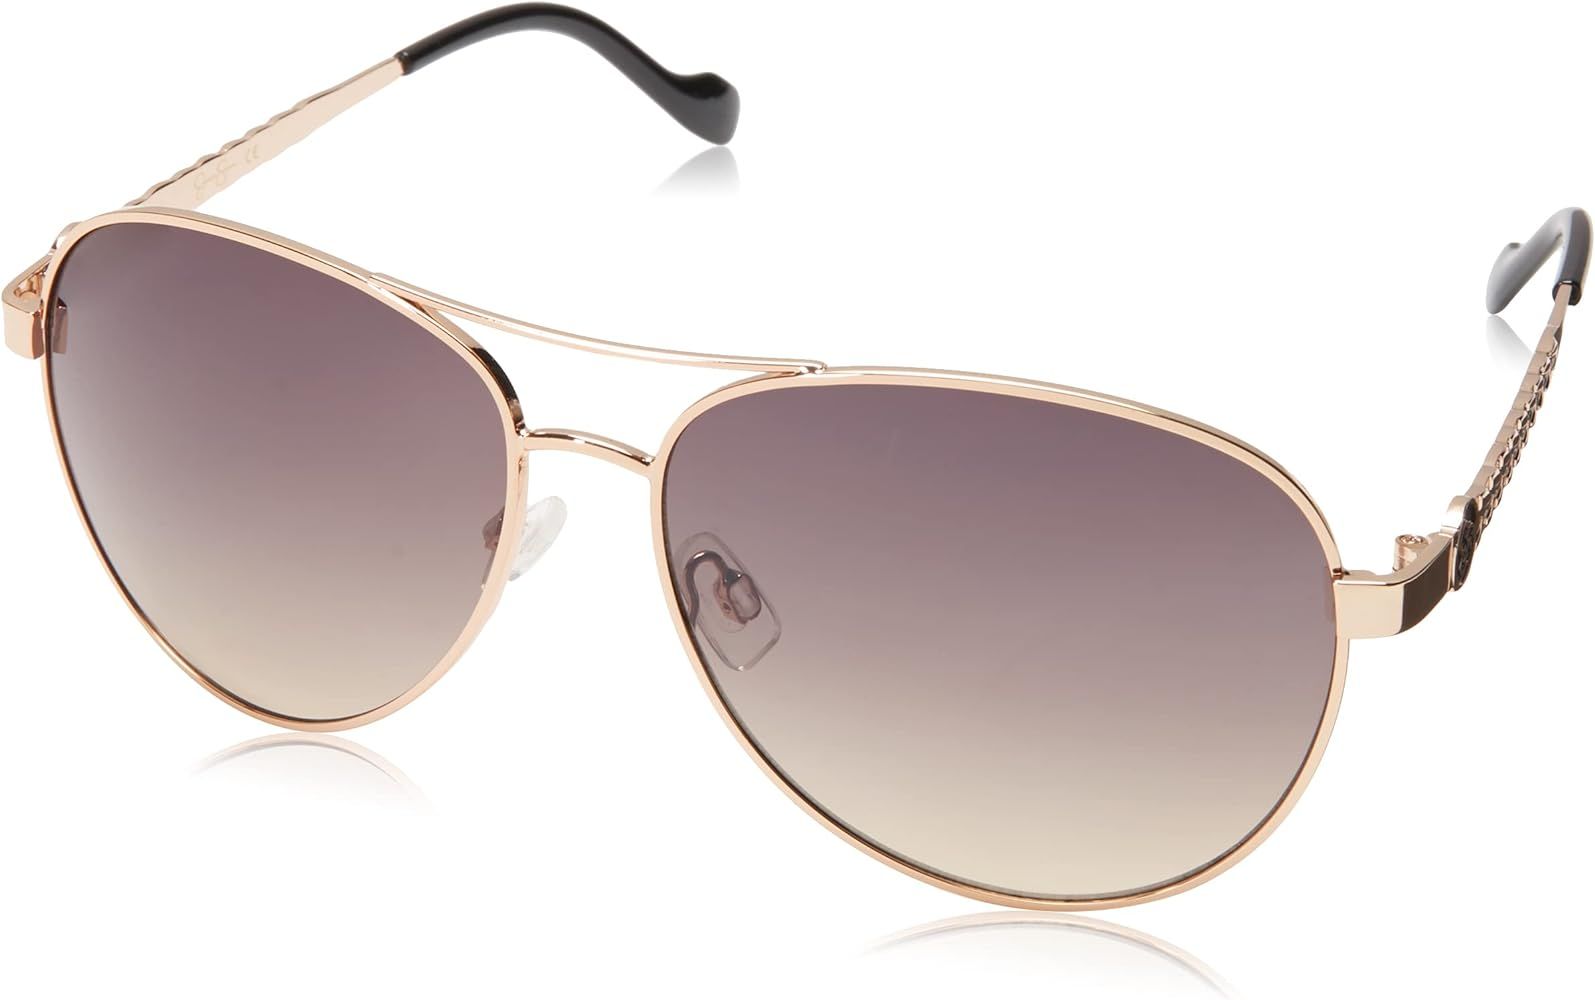 Jessica Simpson J5702 Classy Women's Metal Aviator Pilot Sunglasses with 100% Uv Protection. Glam... | Amazon (US)